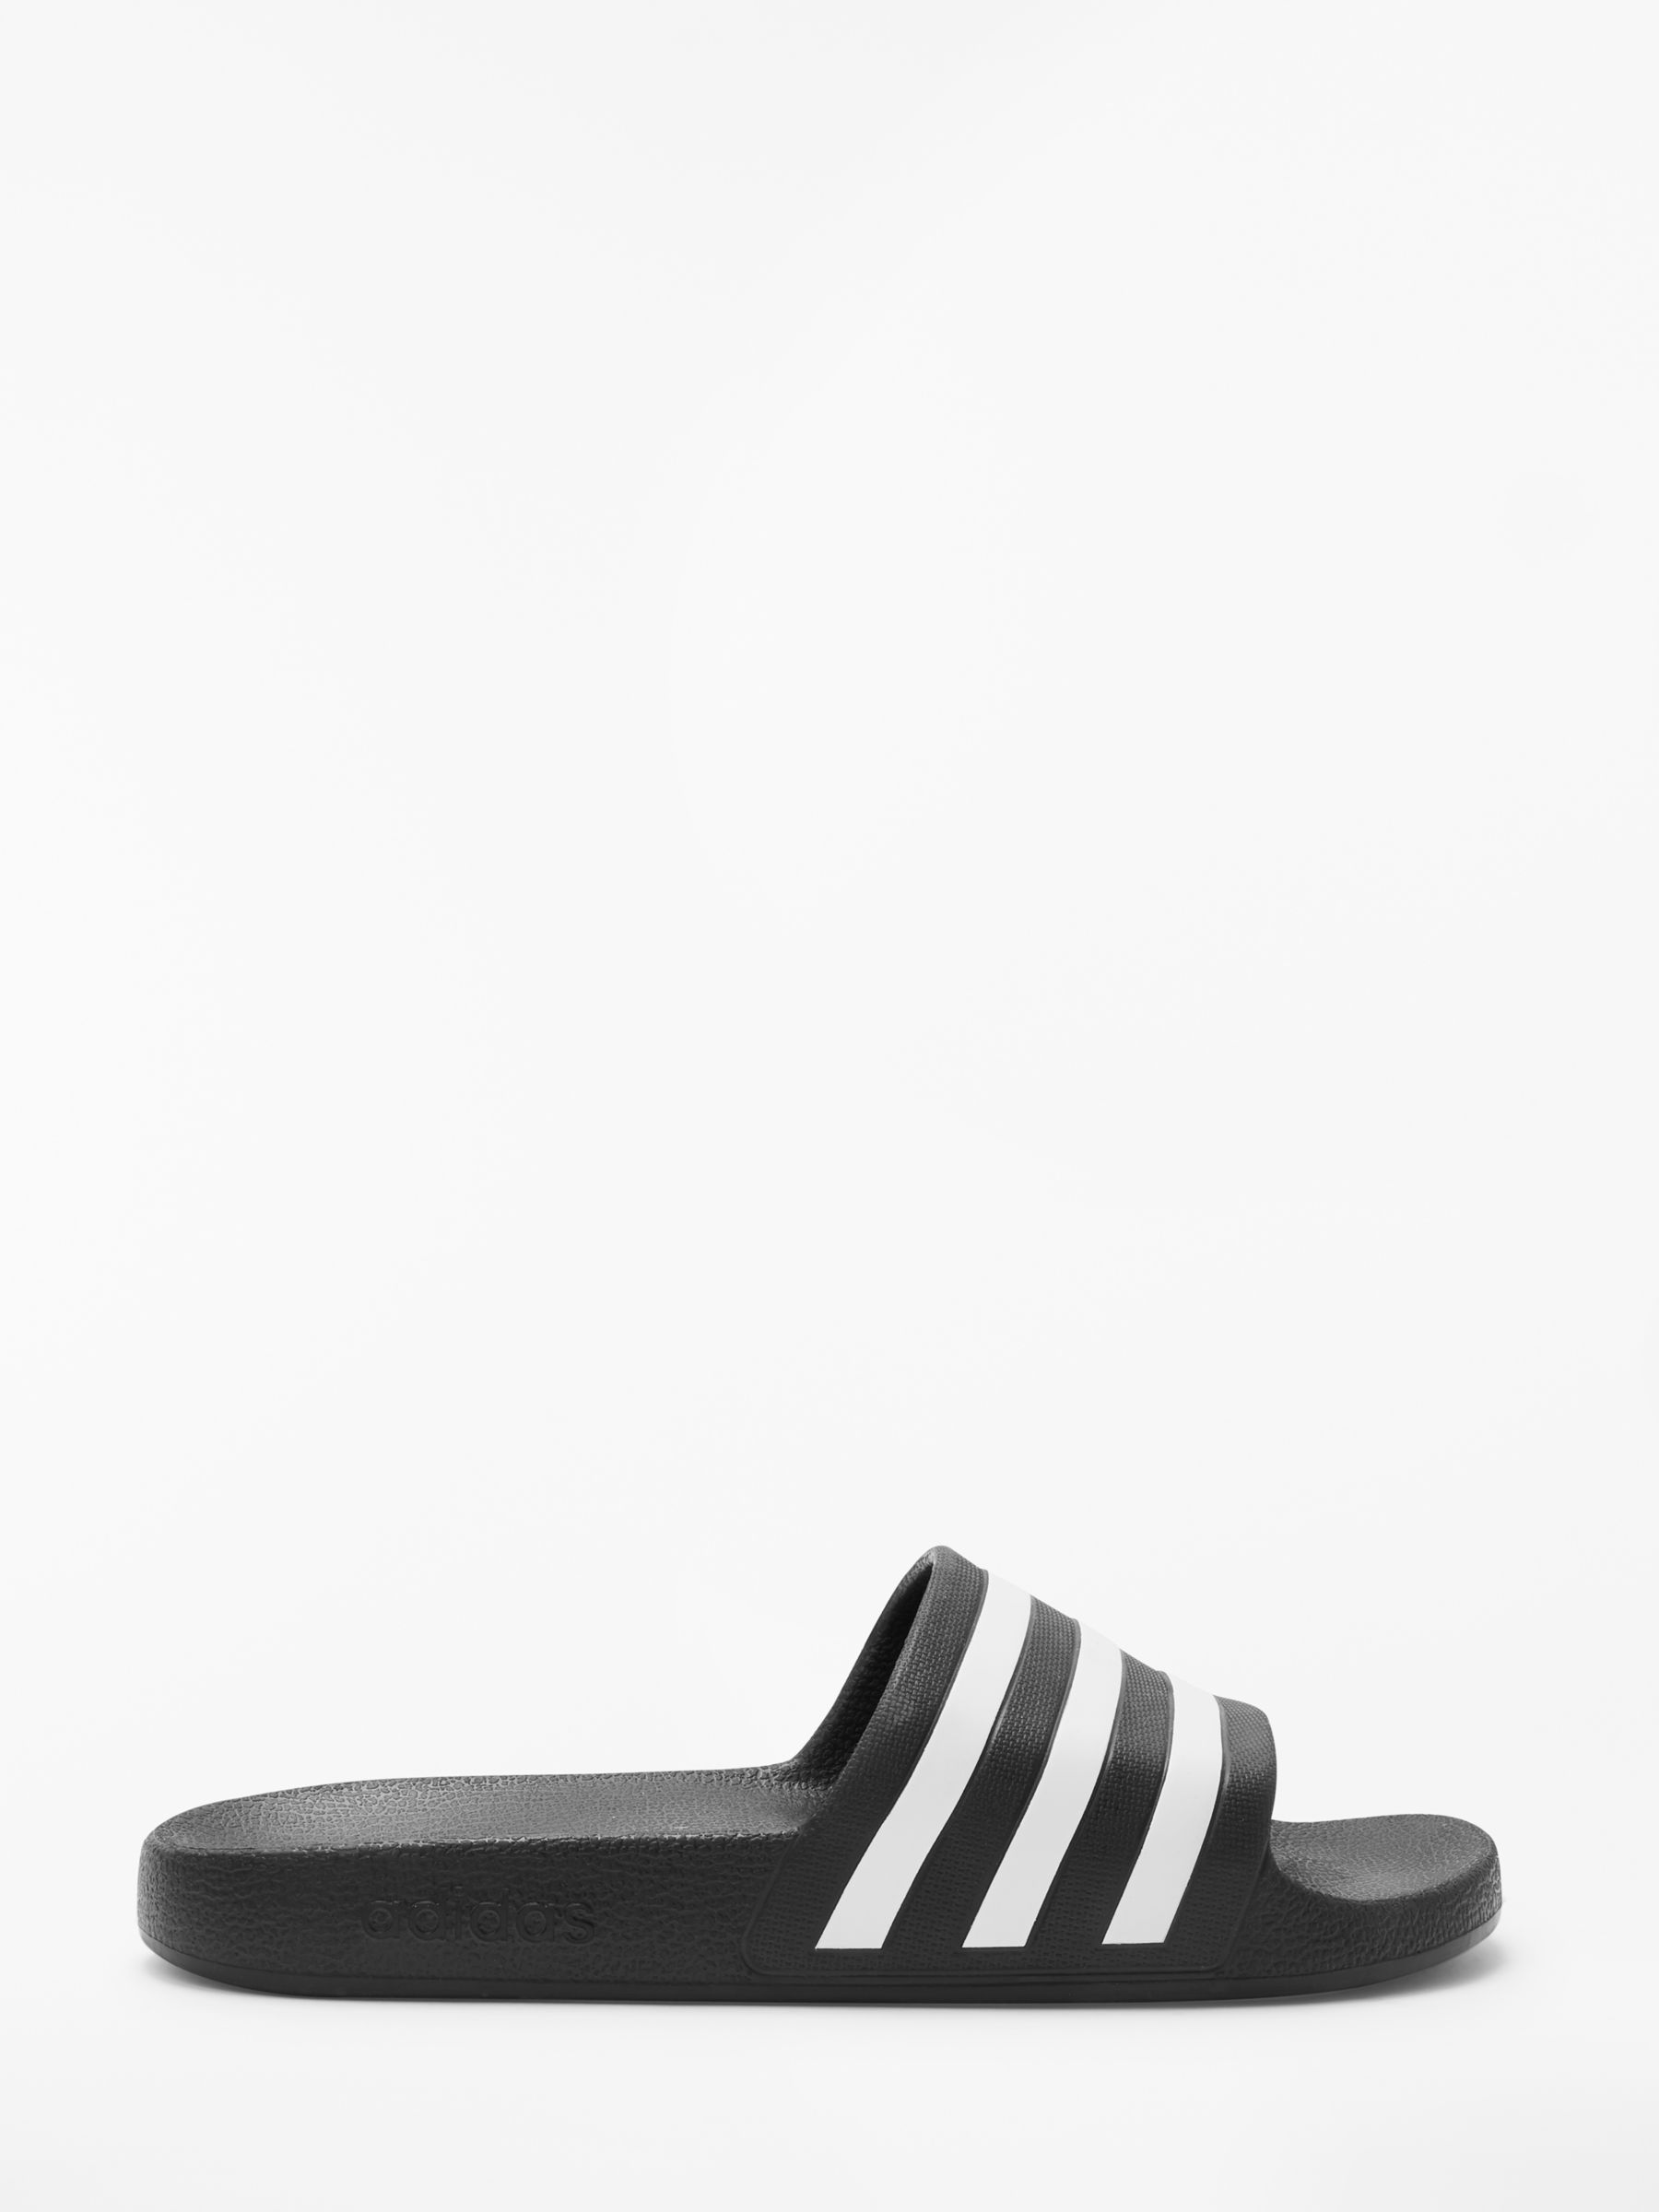 adidas black & white adilette slide sandals